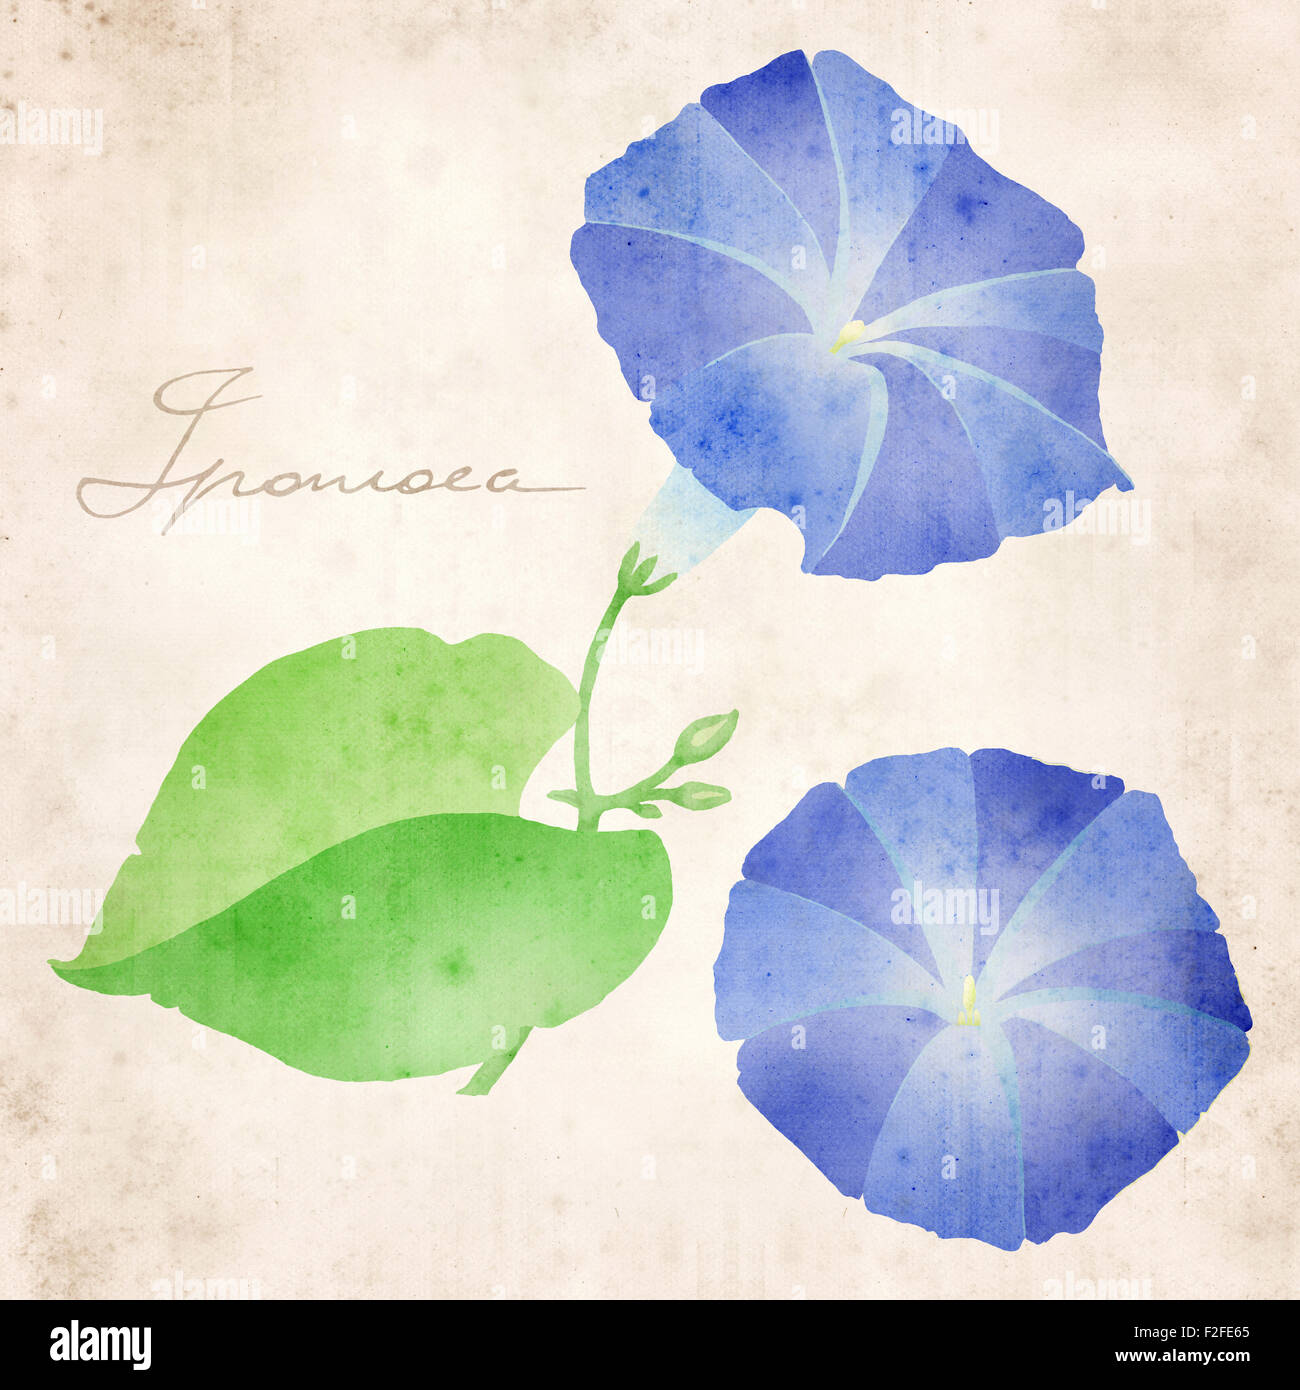 ipomoea illustration in classic botanical illustration style Stock Photo